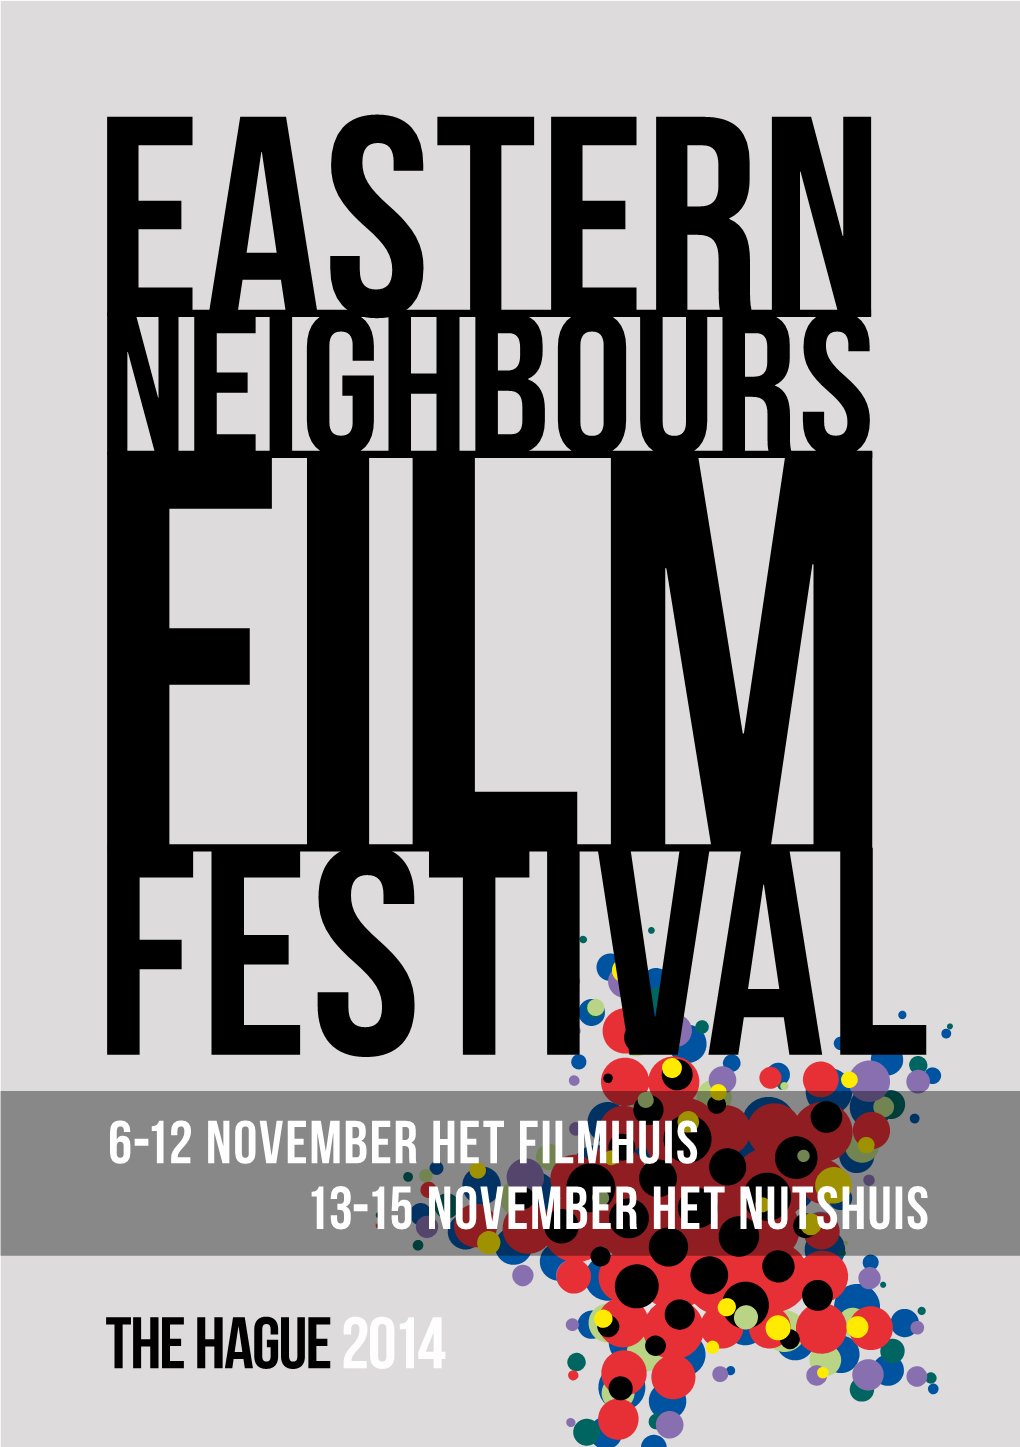 The Hague 2014 1 EASTERN NEIGHBOURS FILM FESTIVAL